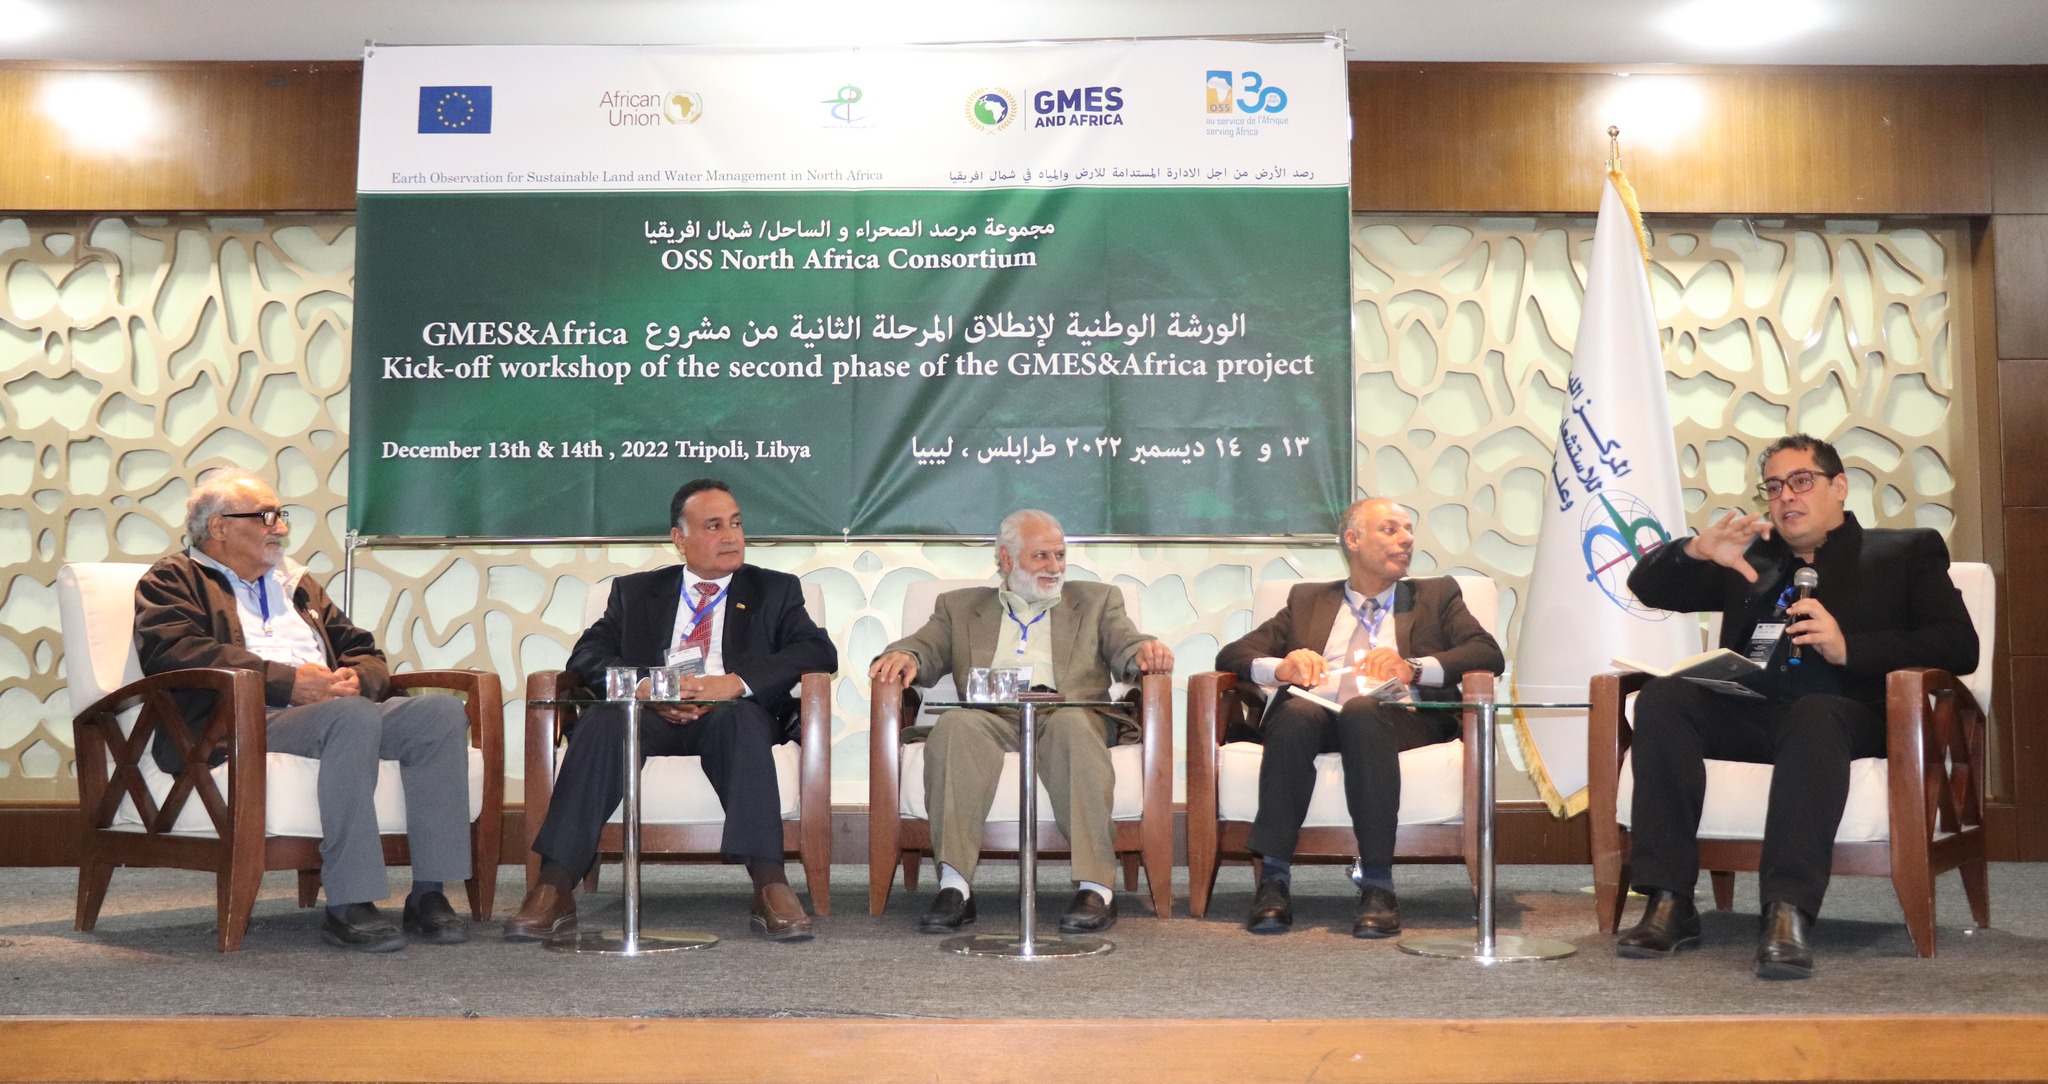  GMES&Africa  OSS/North Africa Consortium Libya